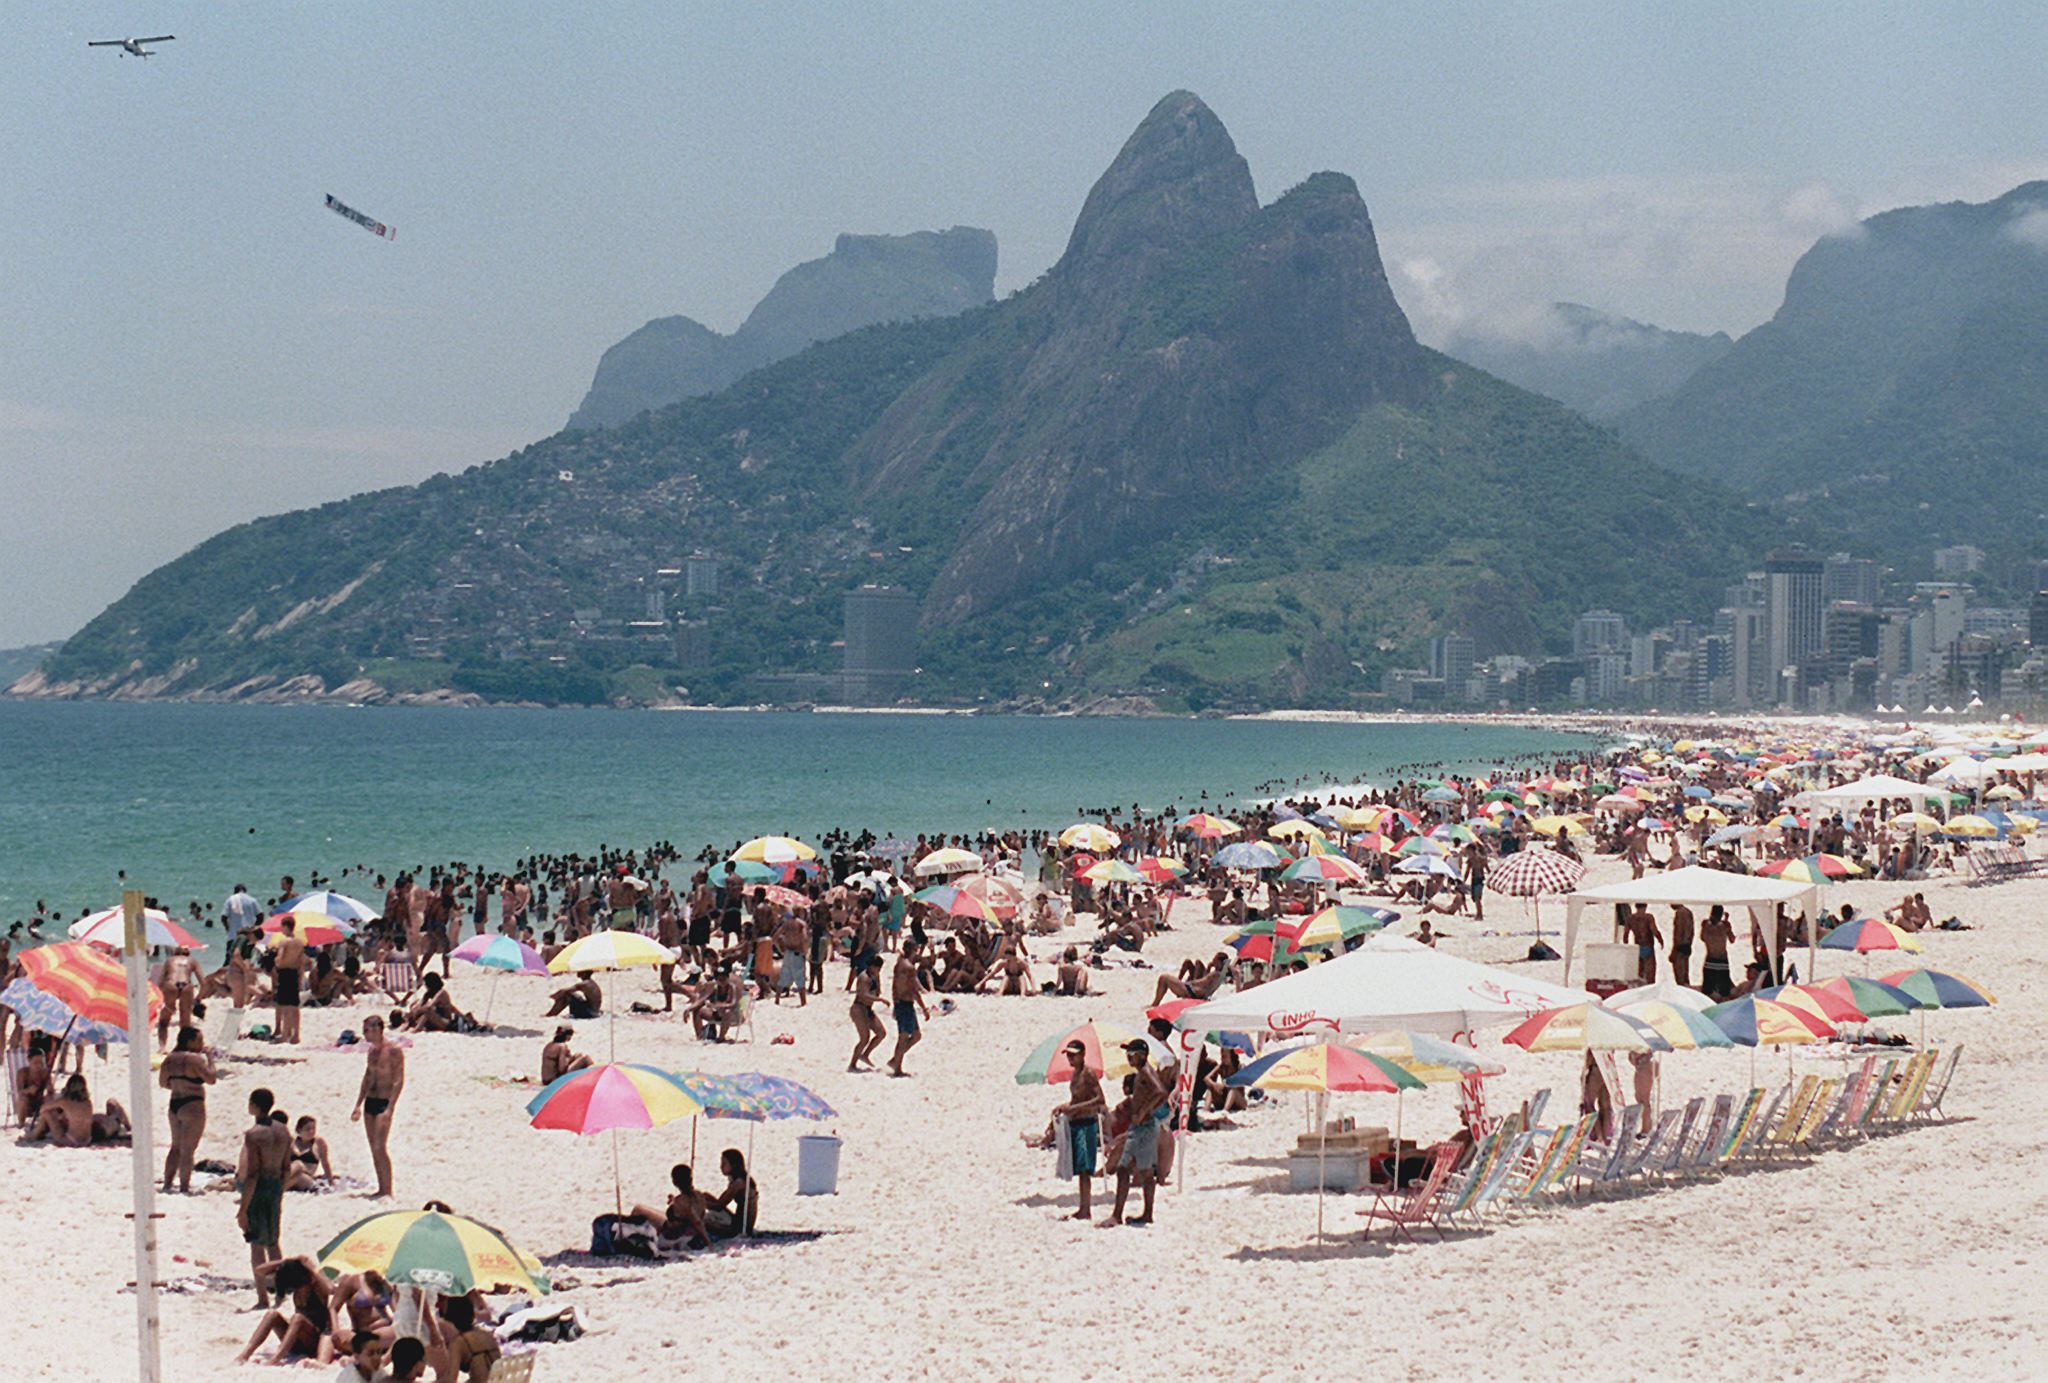 Beachgoers at Rio de Janeiro's Ipanema Beach take